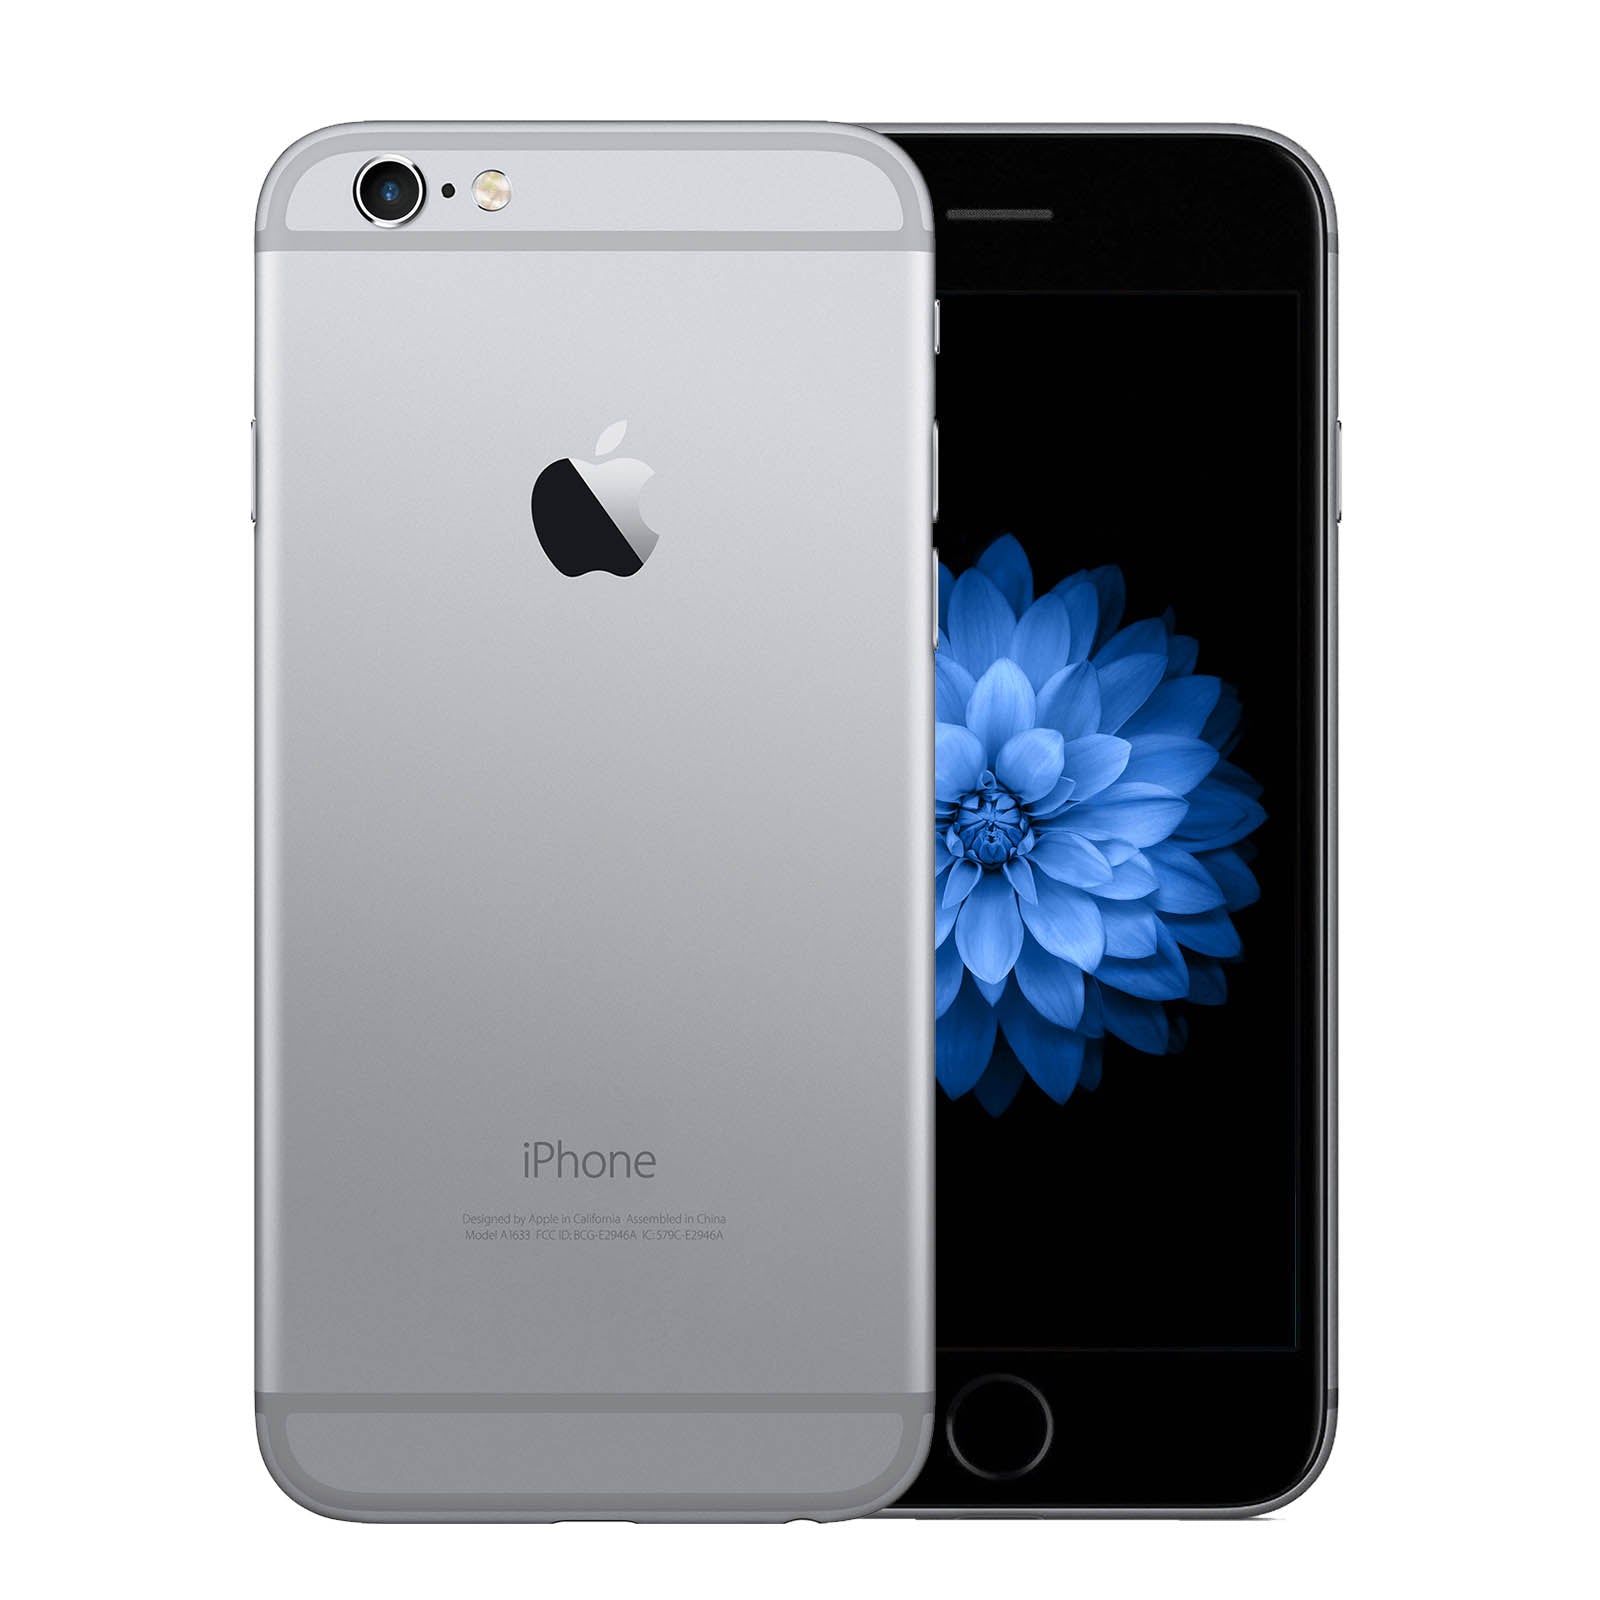 Apple iPhone 6 16GB Space Grey Pristine - Unlocked